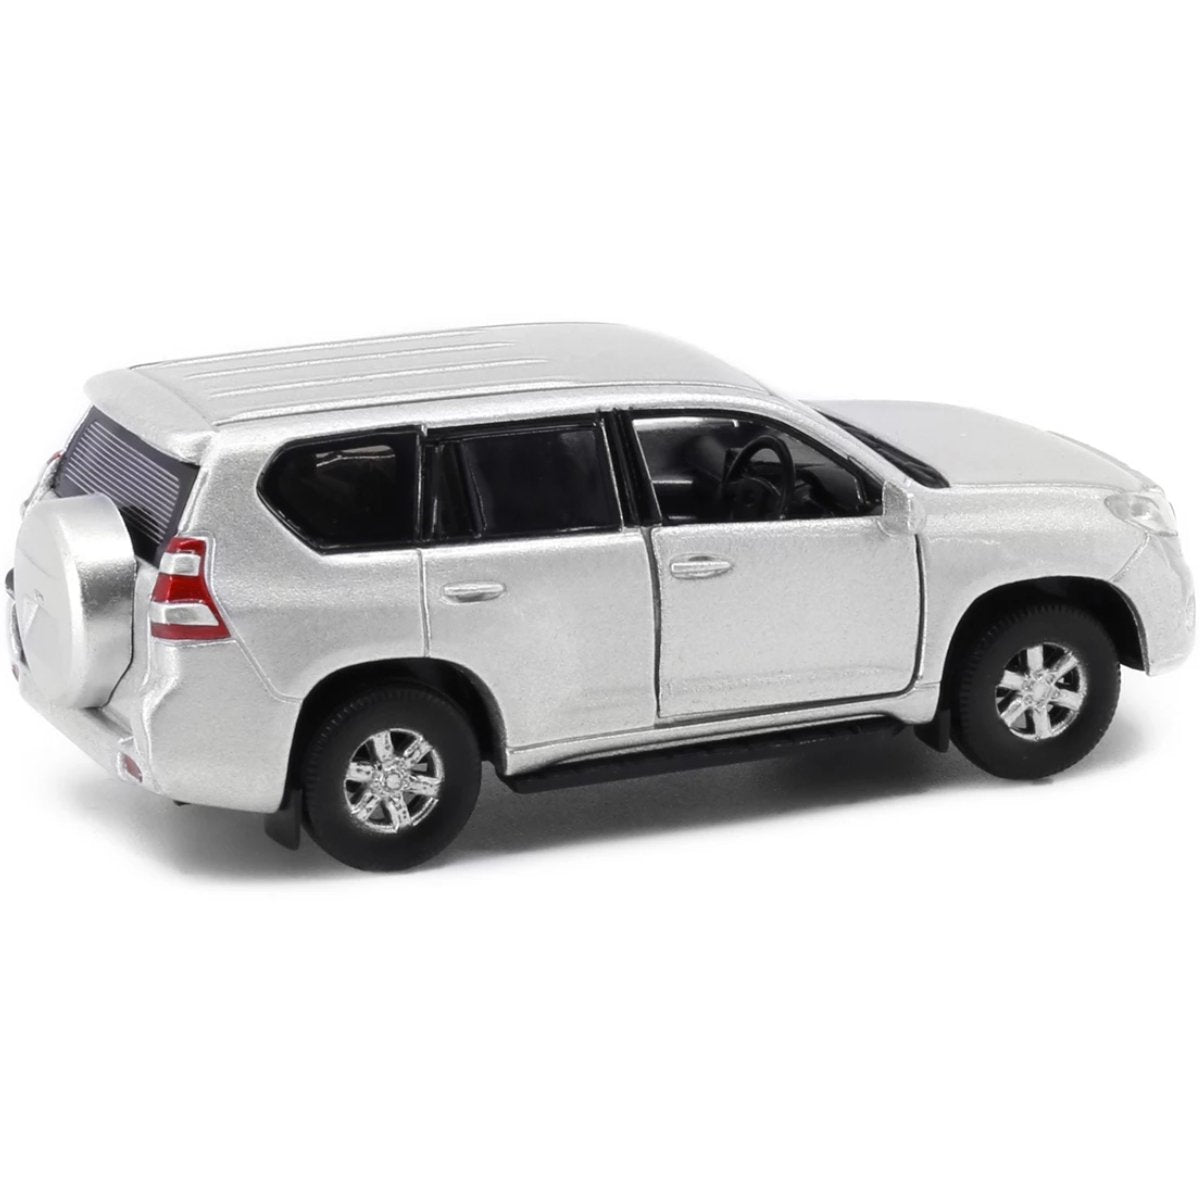 Tiny Models Toyota Prado Silver (1:64 Scale) - Phillips Hobbies